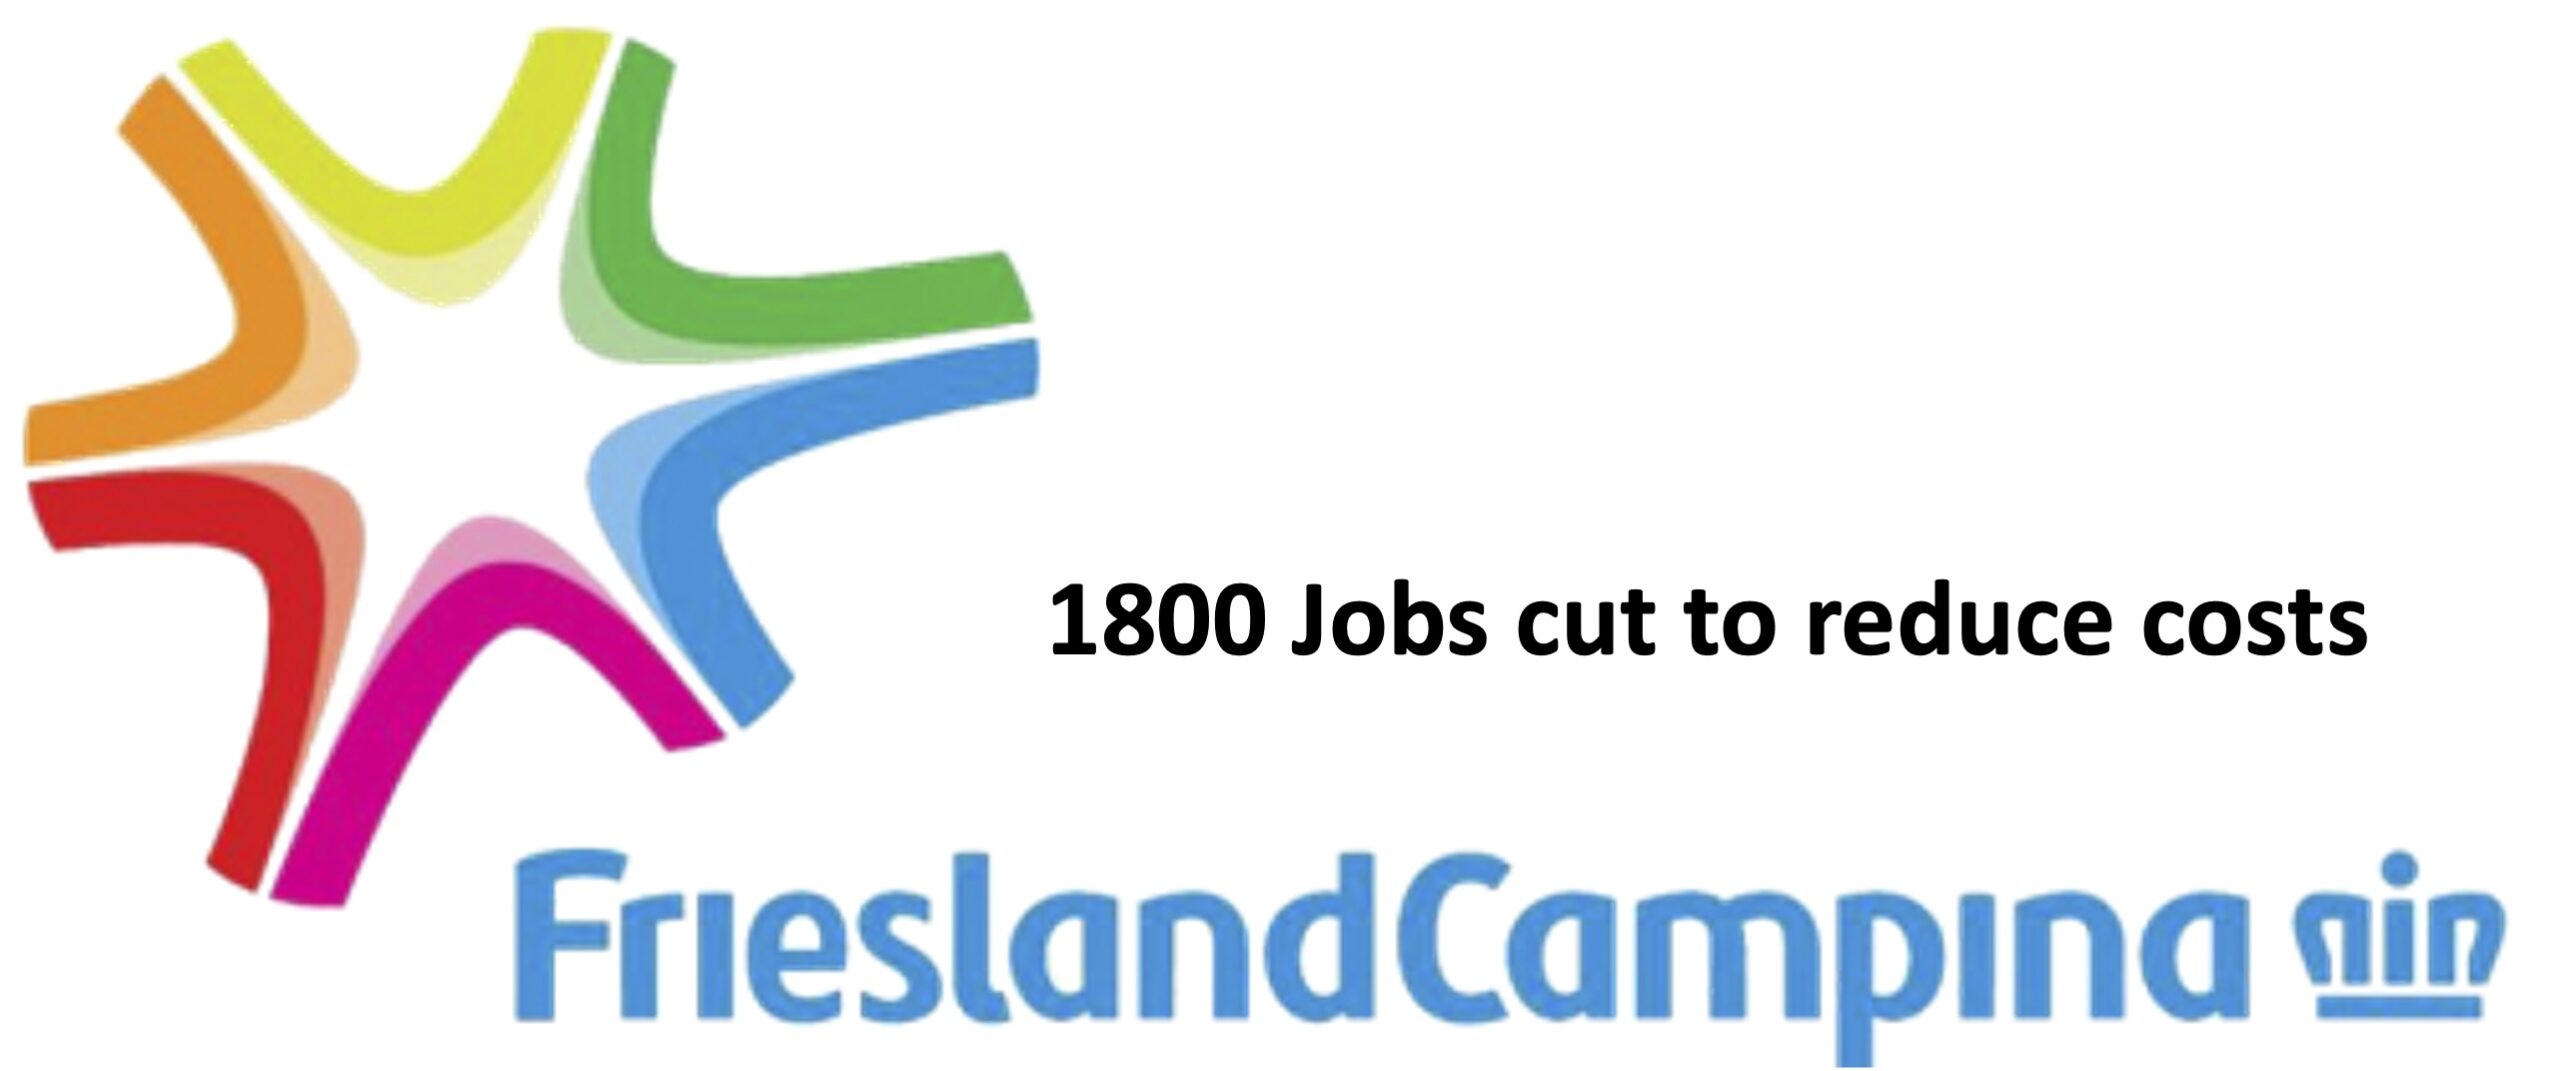 friesland campina cuts job dairynews7x7